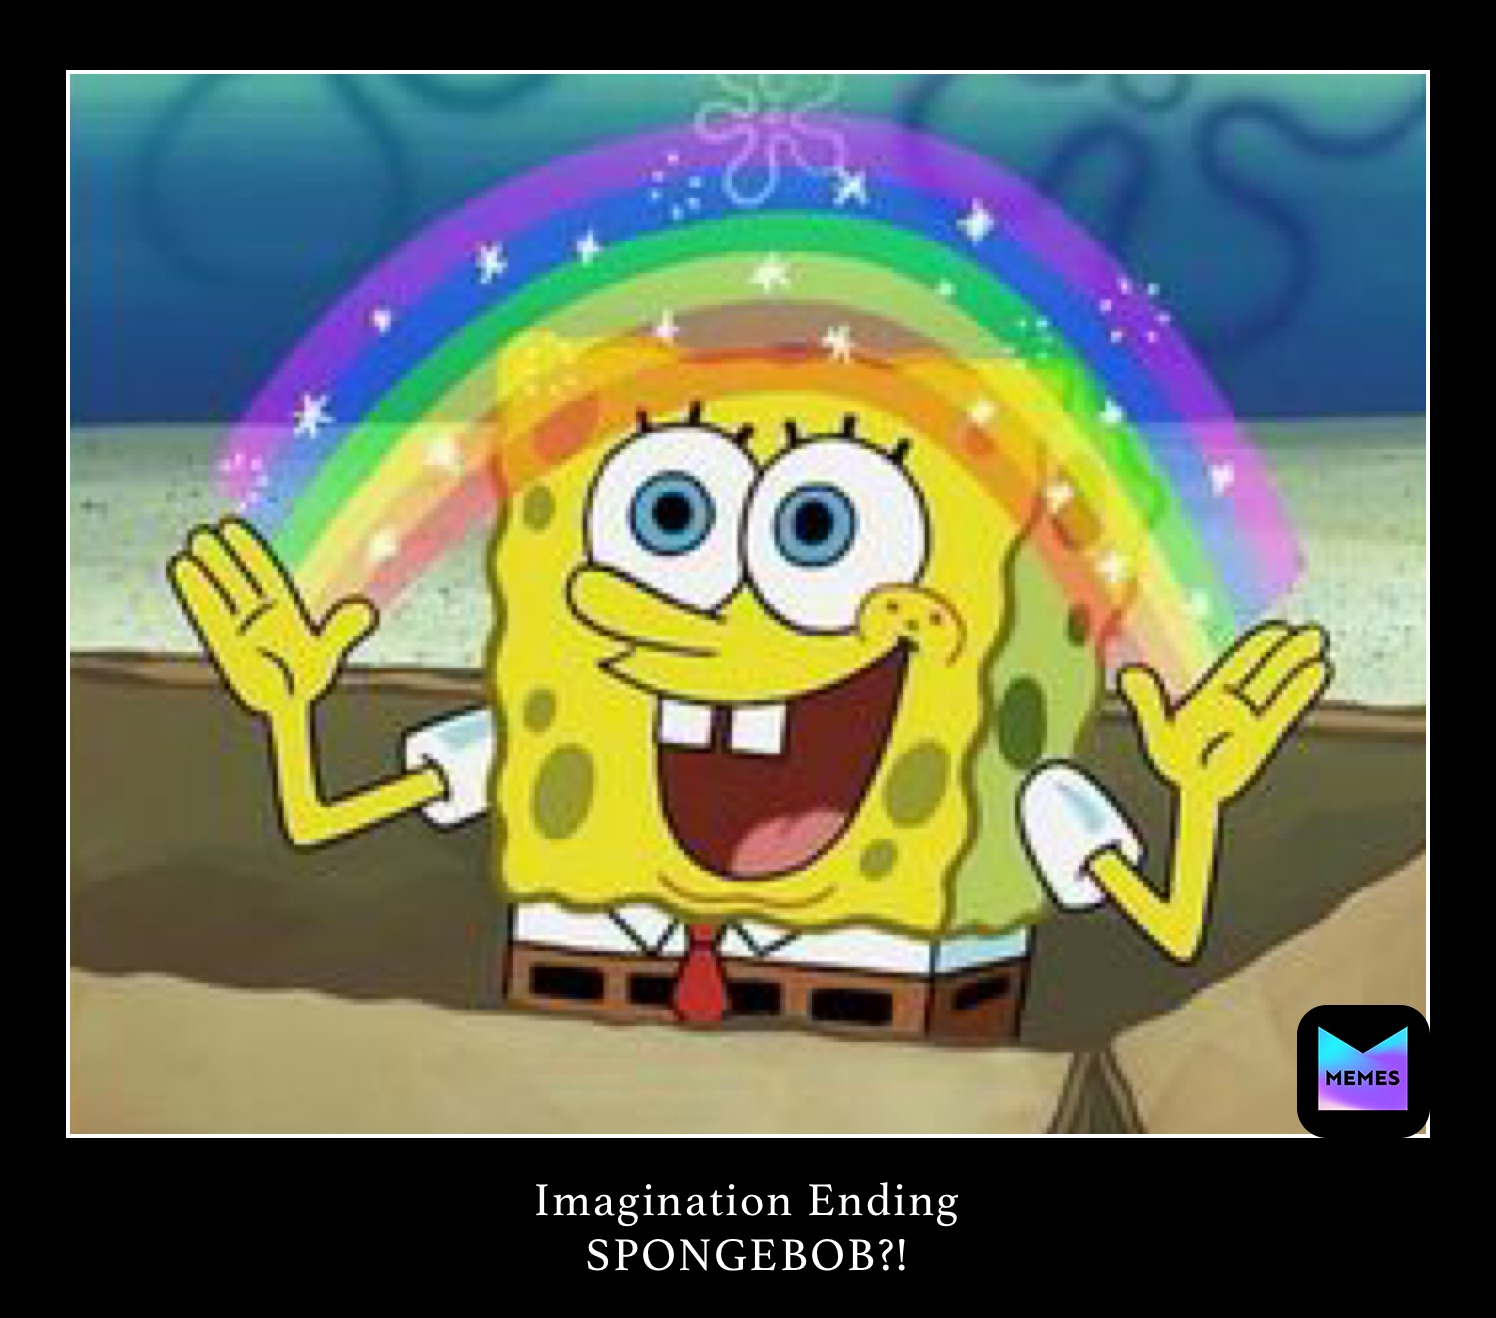 Imagination Ending
SPONGEBOB?!